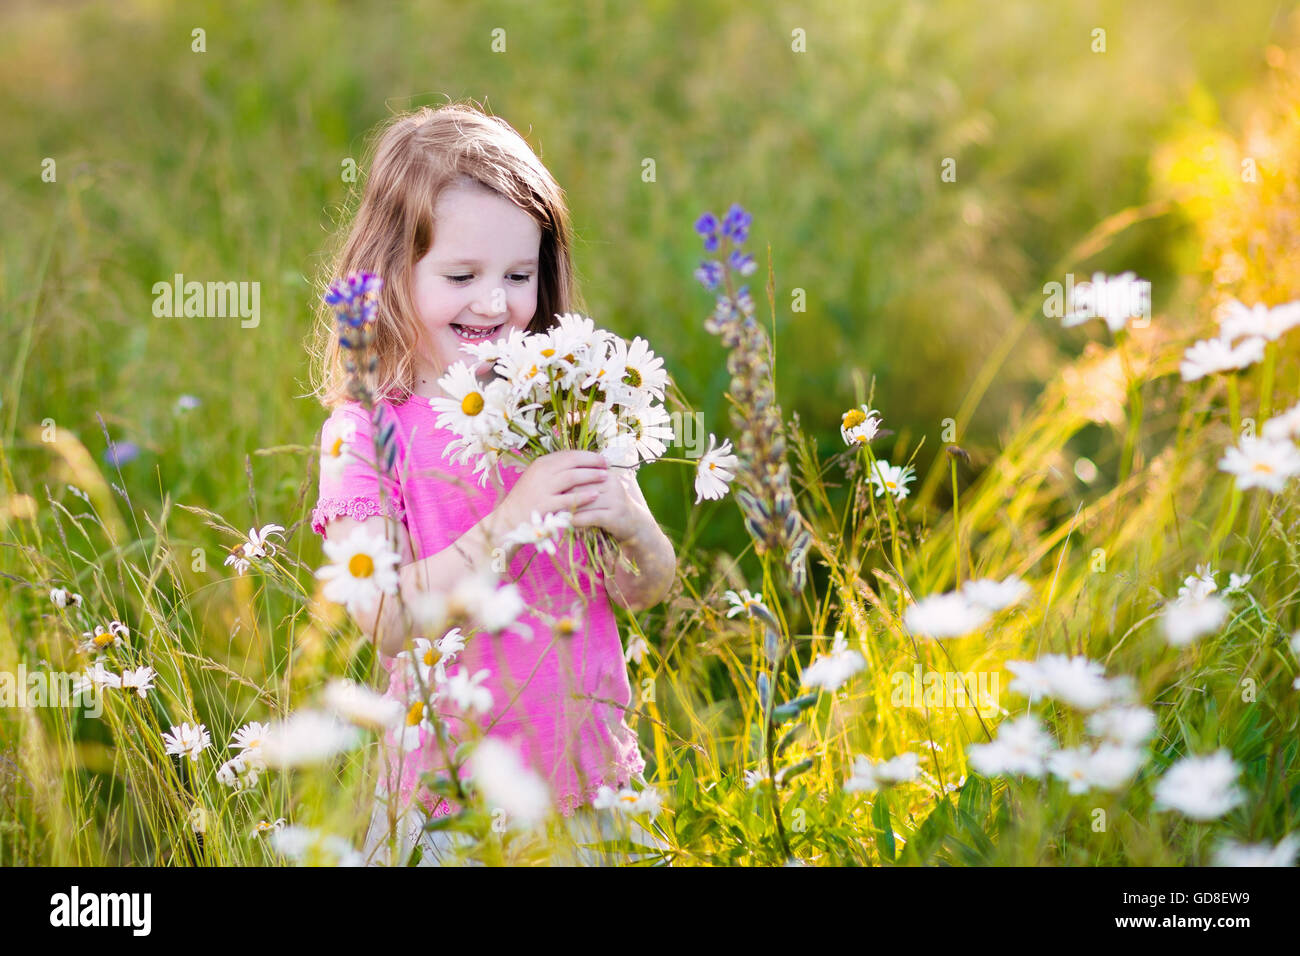 Little Girl Picking Wild Flowers In A Field Stock Photo ...